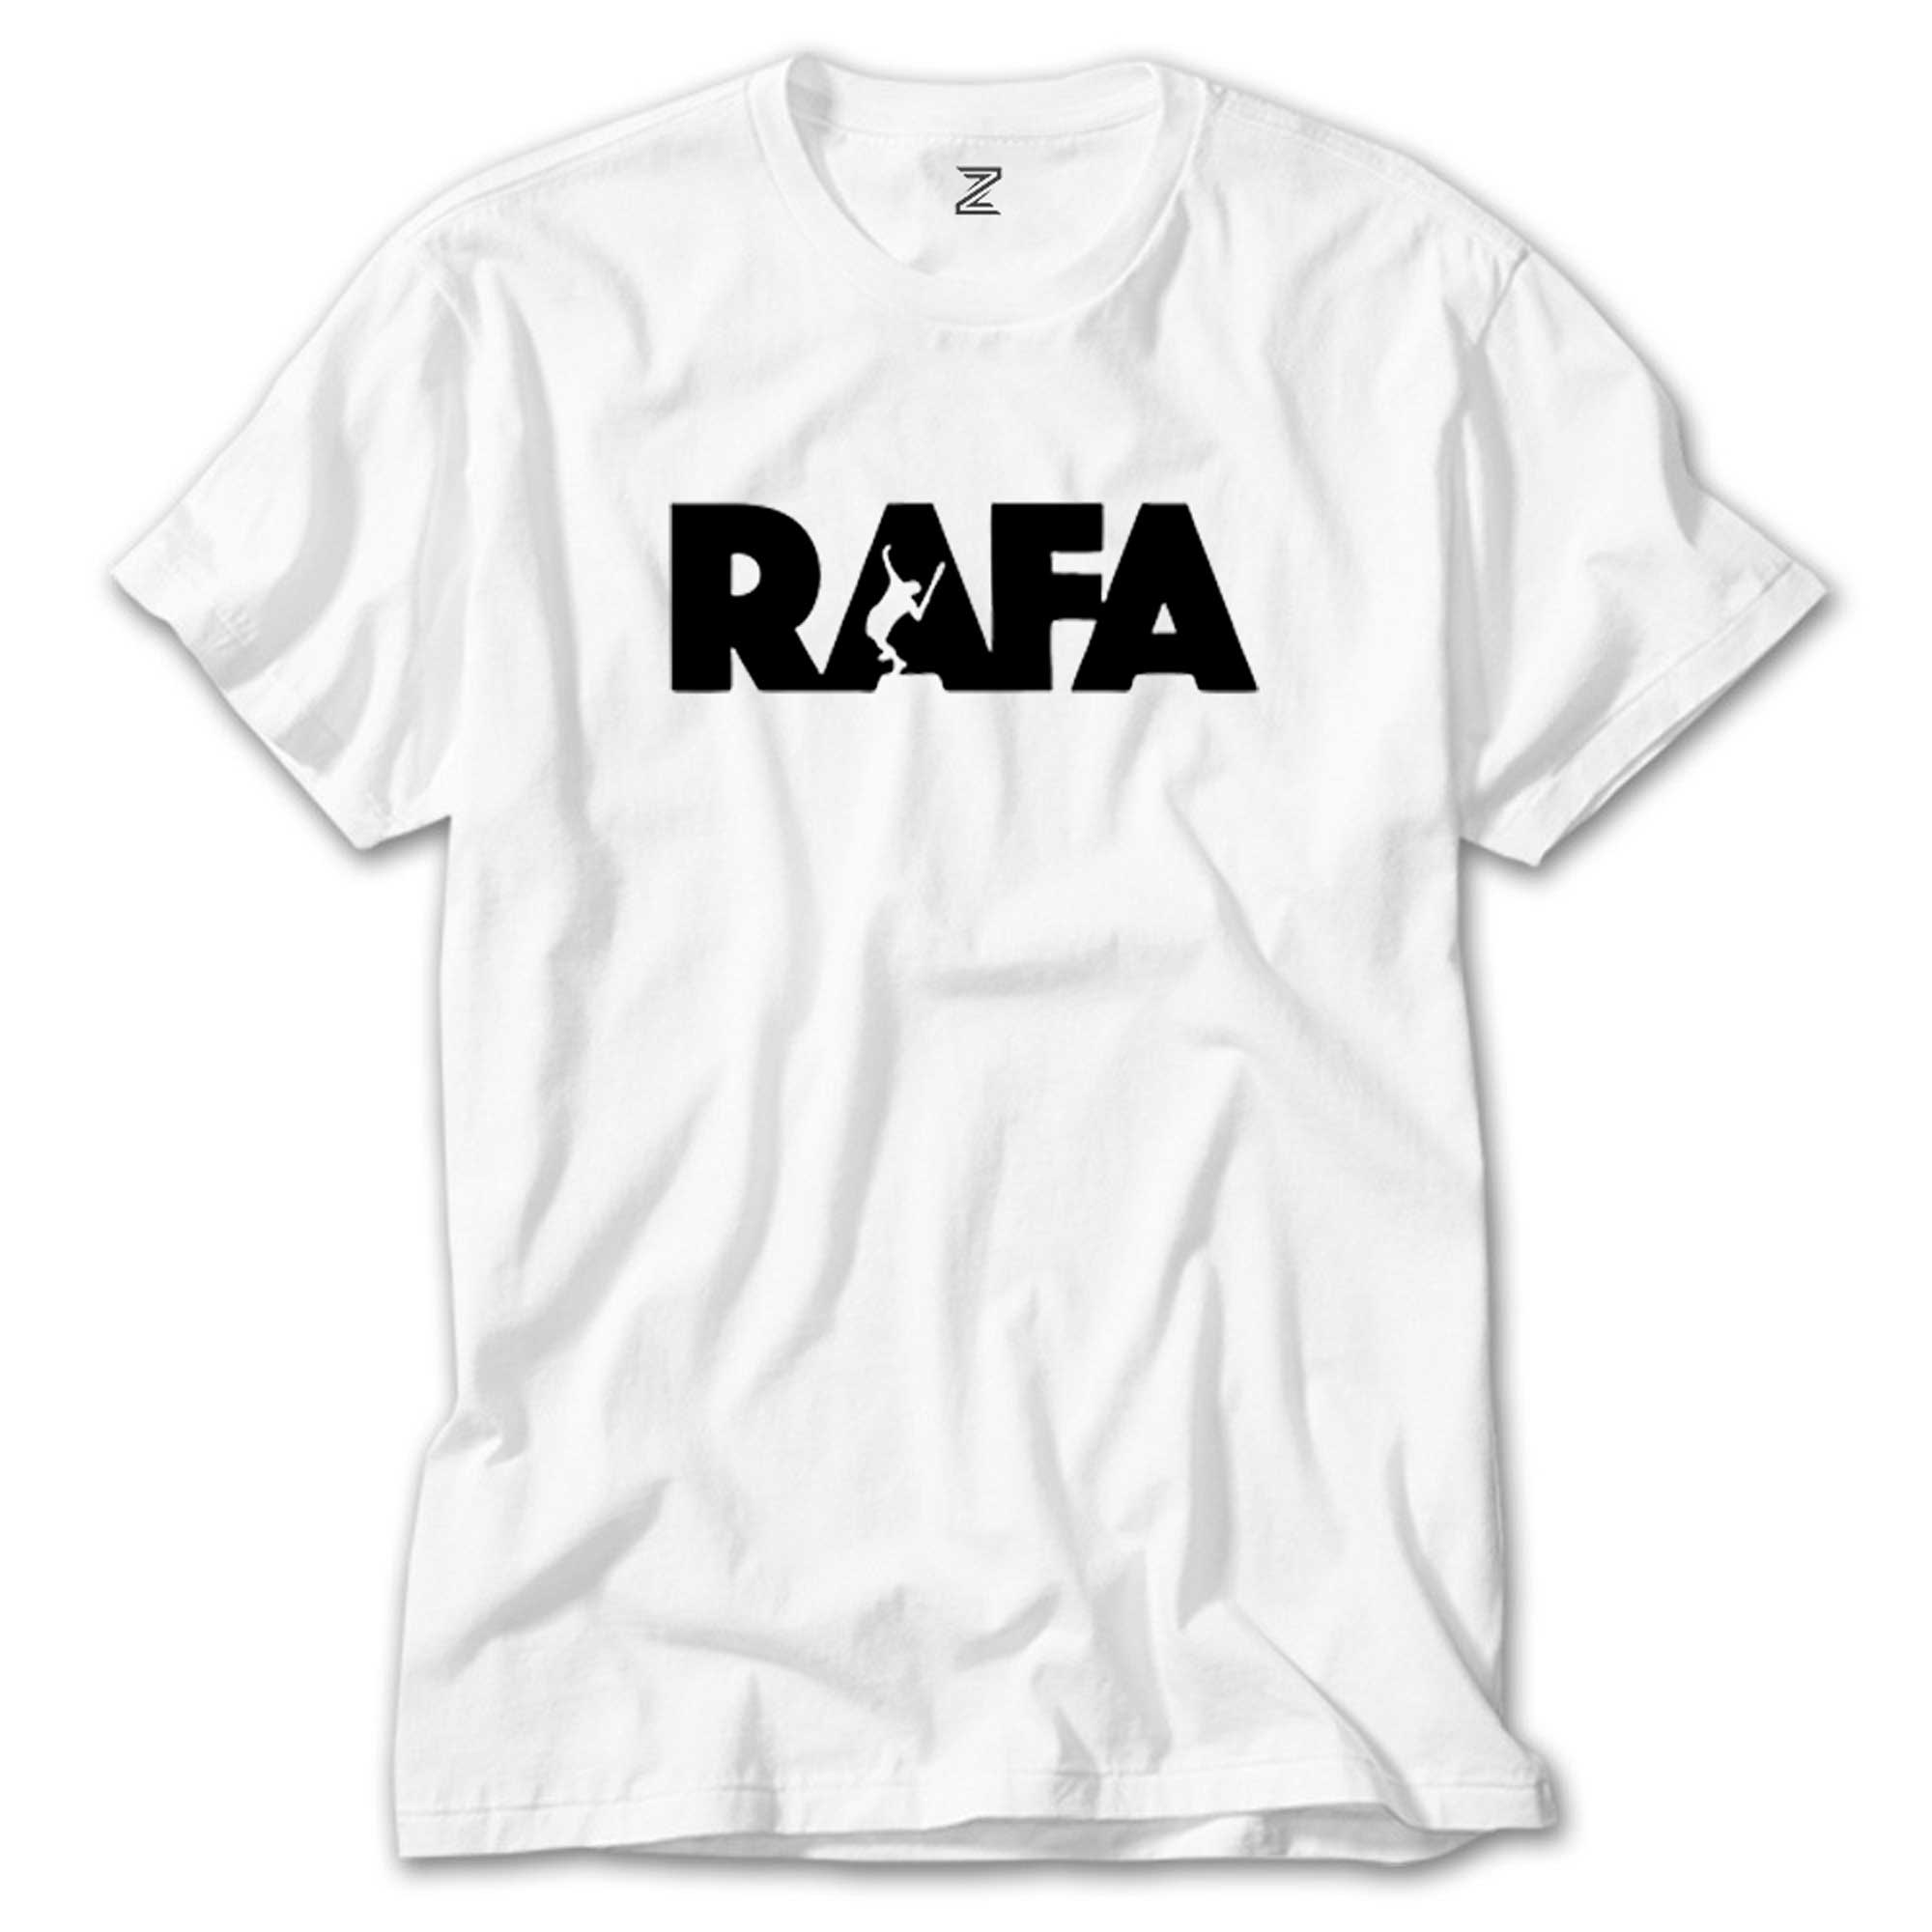 Rafael Nadal Text Beyaz Tişört